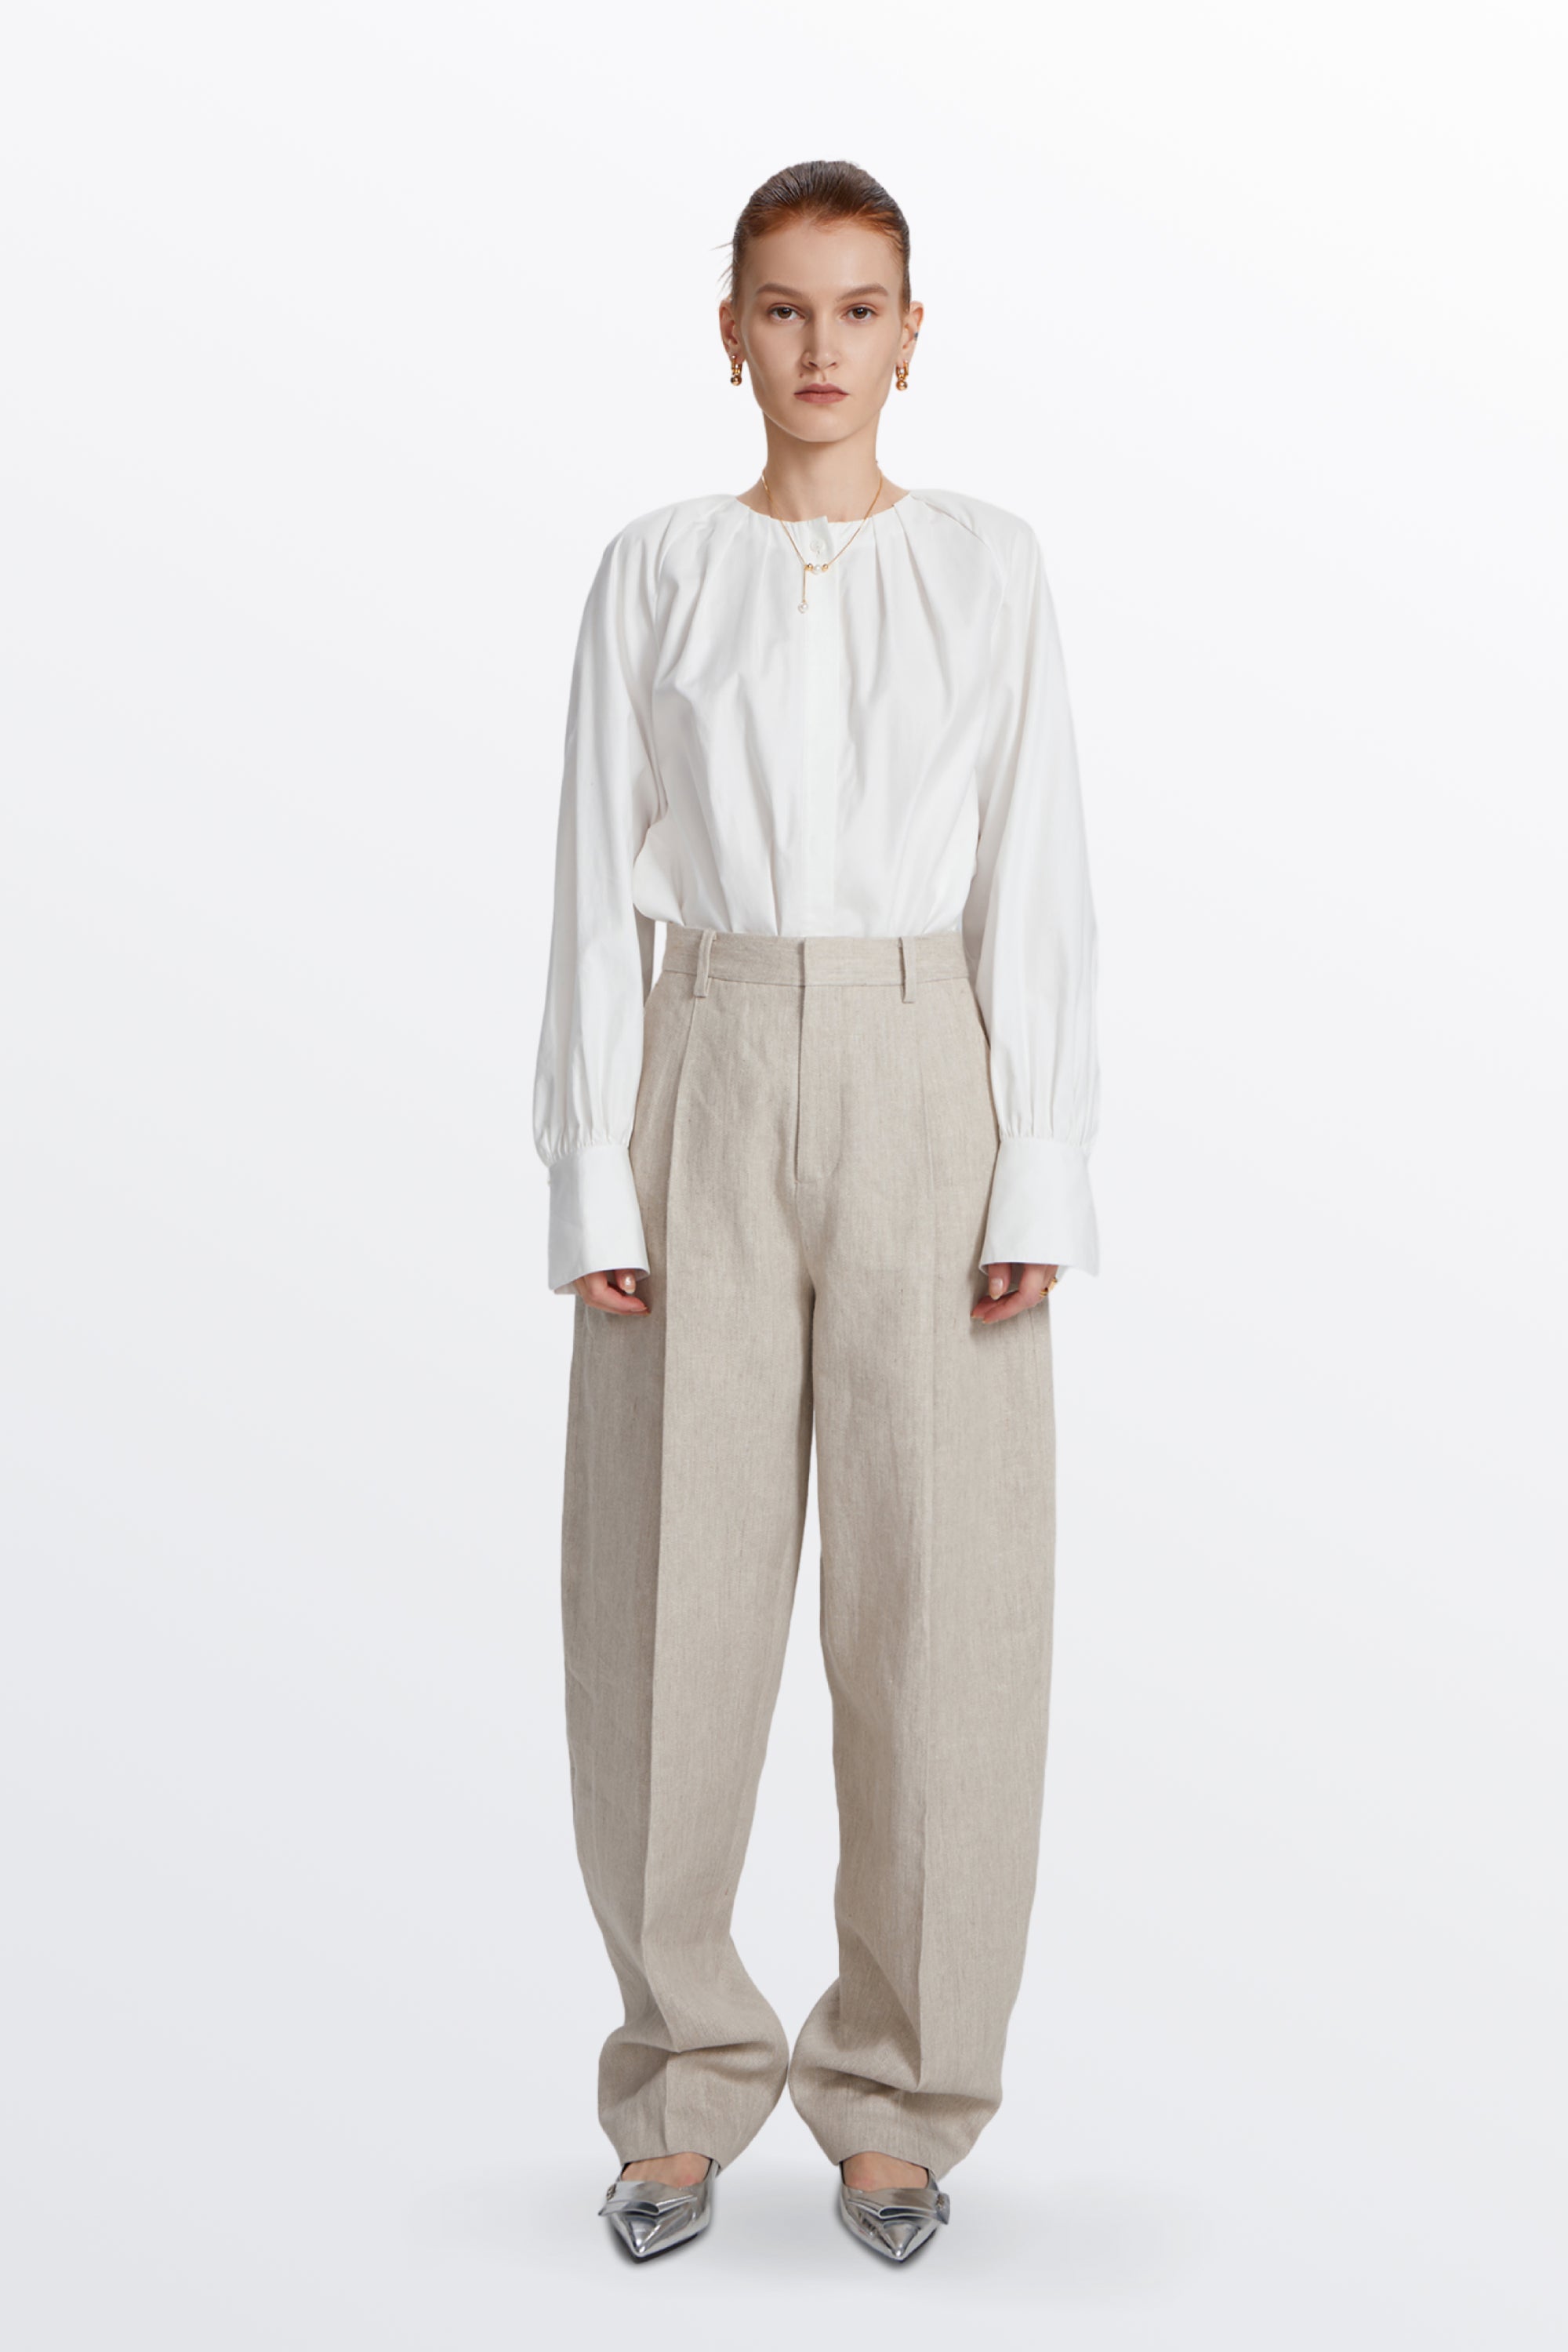 Giselle Pleated Suit Pants in Linen Cotton Blend